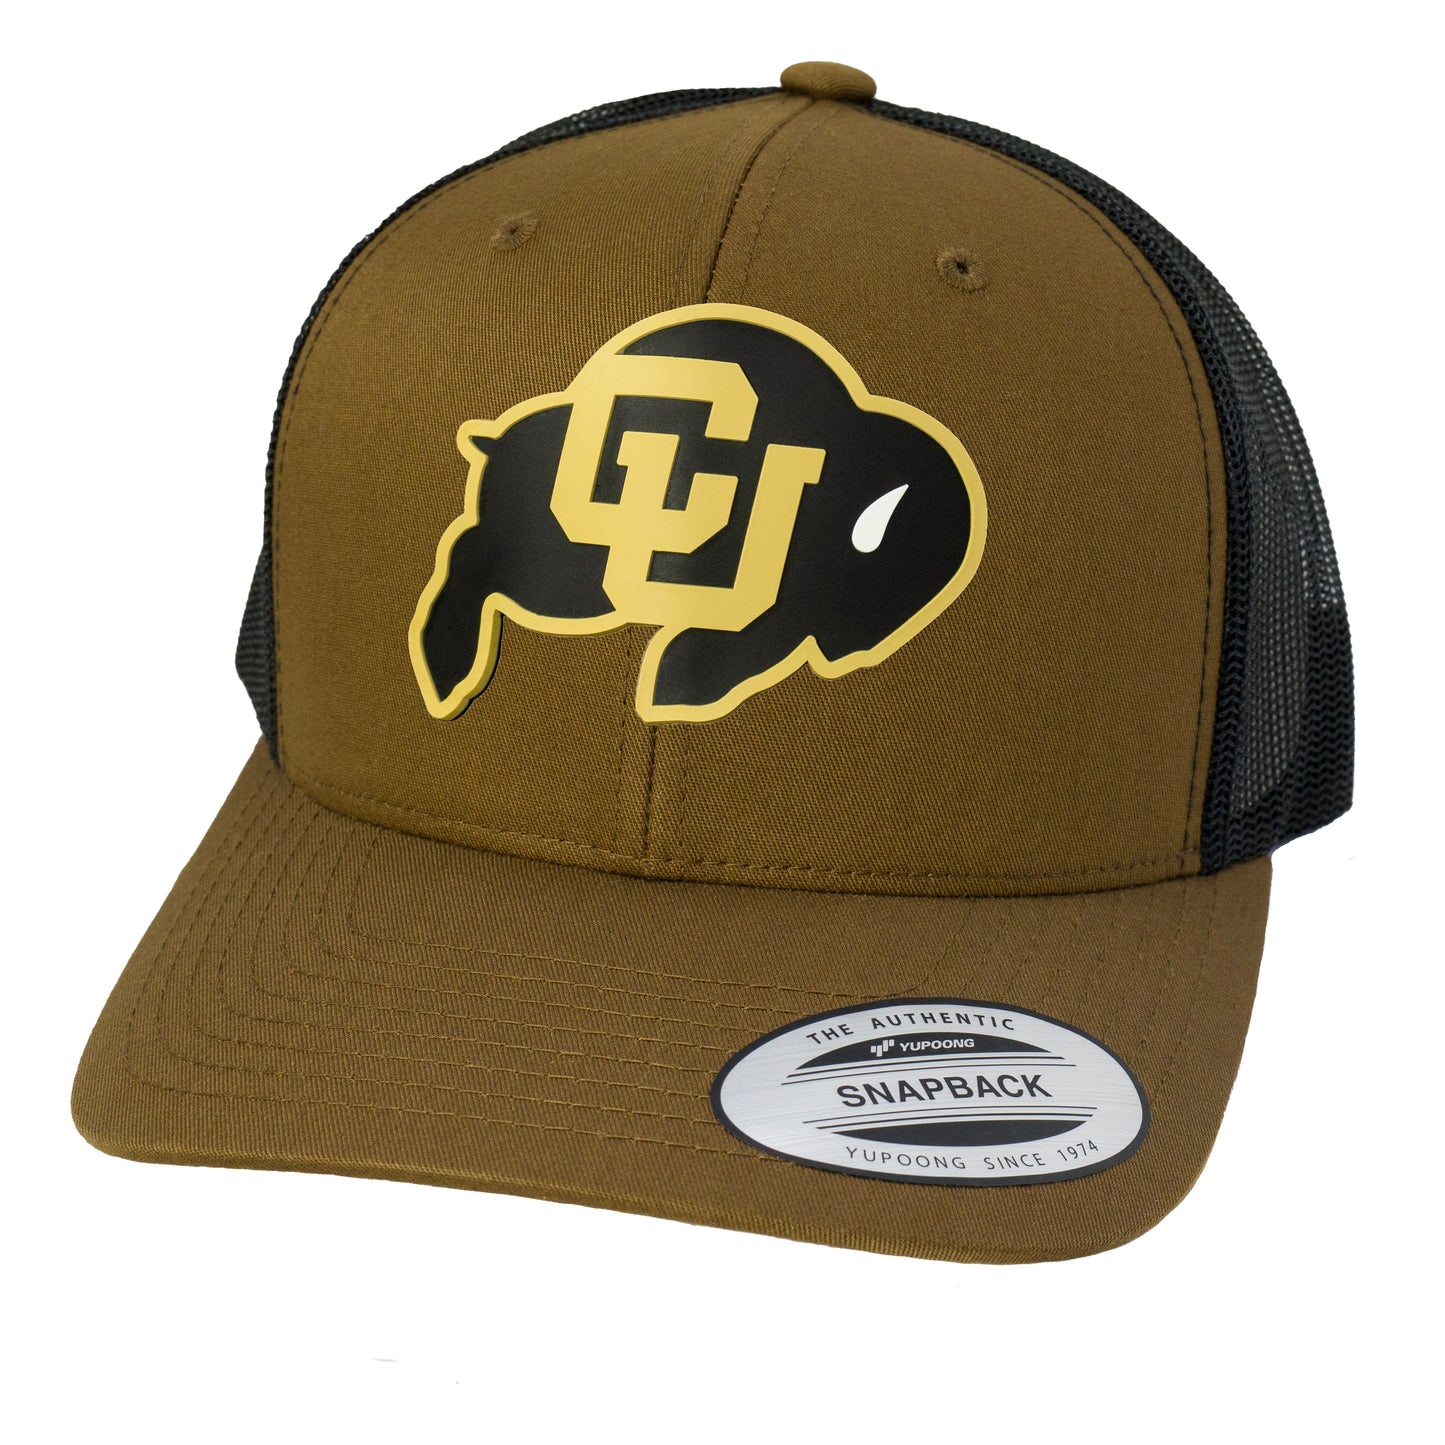 Colorado Buffaloes 3D YP Snapback Trucker Hat- Coyote Brown/ Black - Ten Gallon Hat Co.